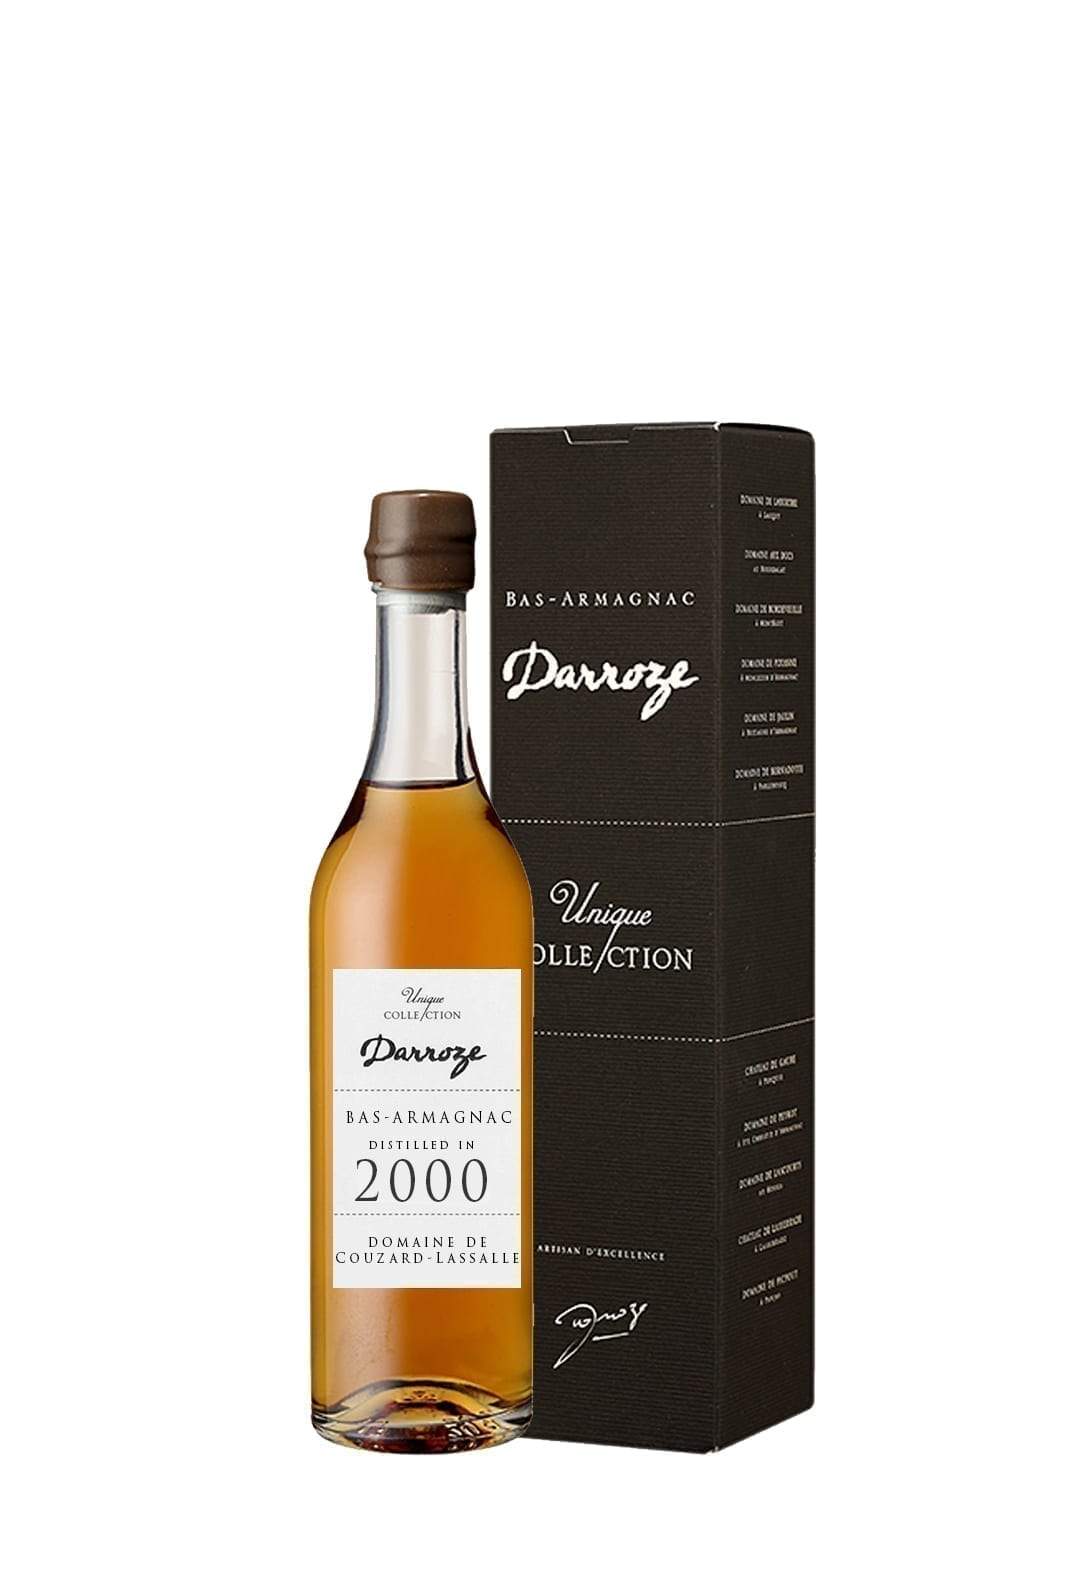 Darroze 2000 Couzard-Lassalle Armagnac 49.3% 200ml | Brandy | Shop online at Spirits of France